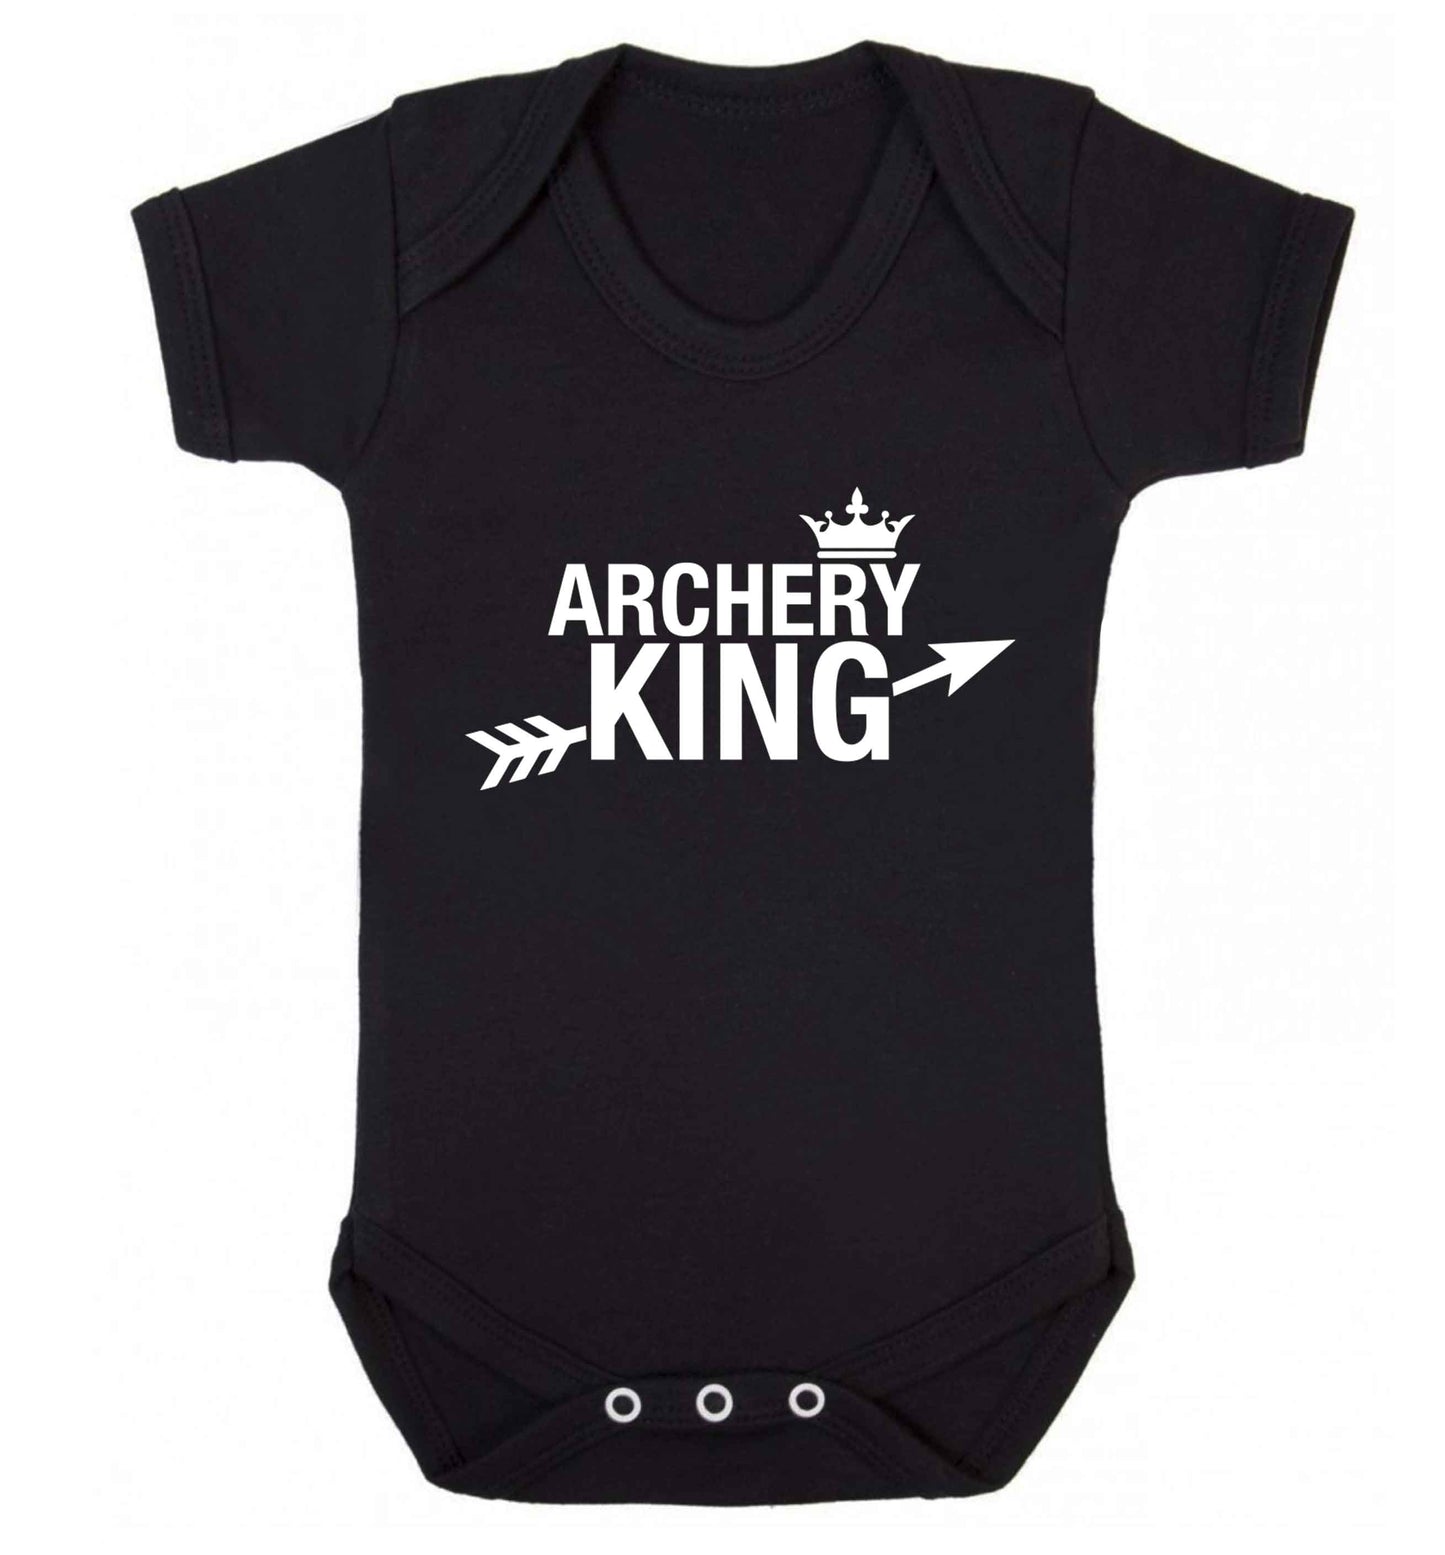 Archery king Baby Vest black 18-24 months